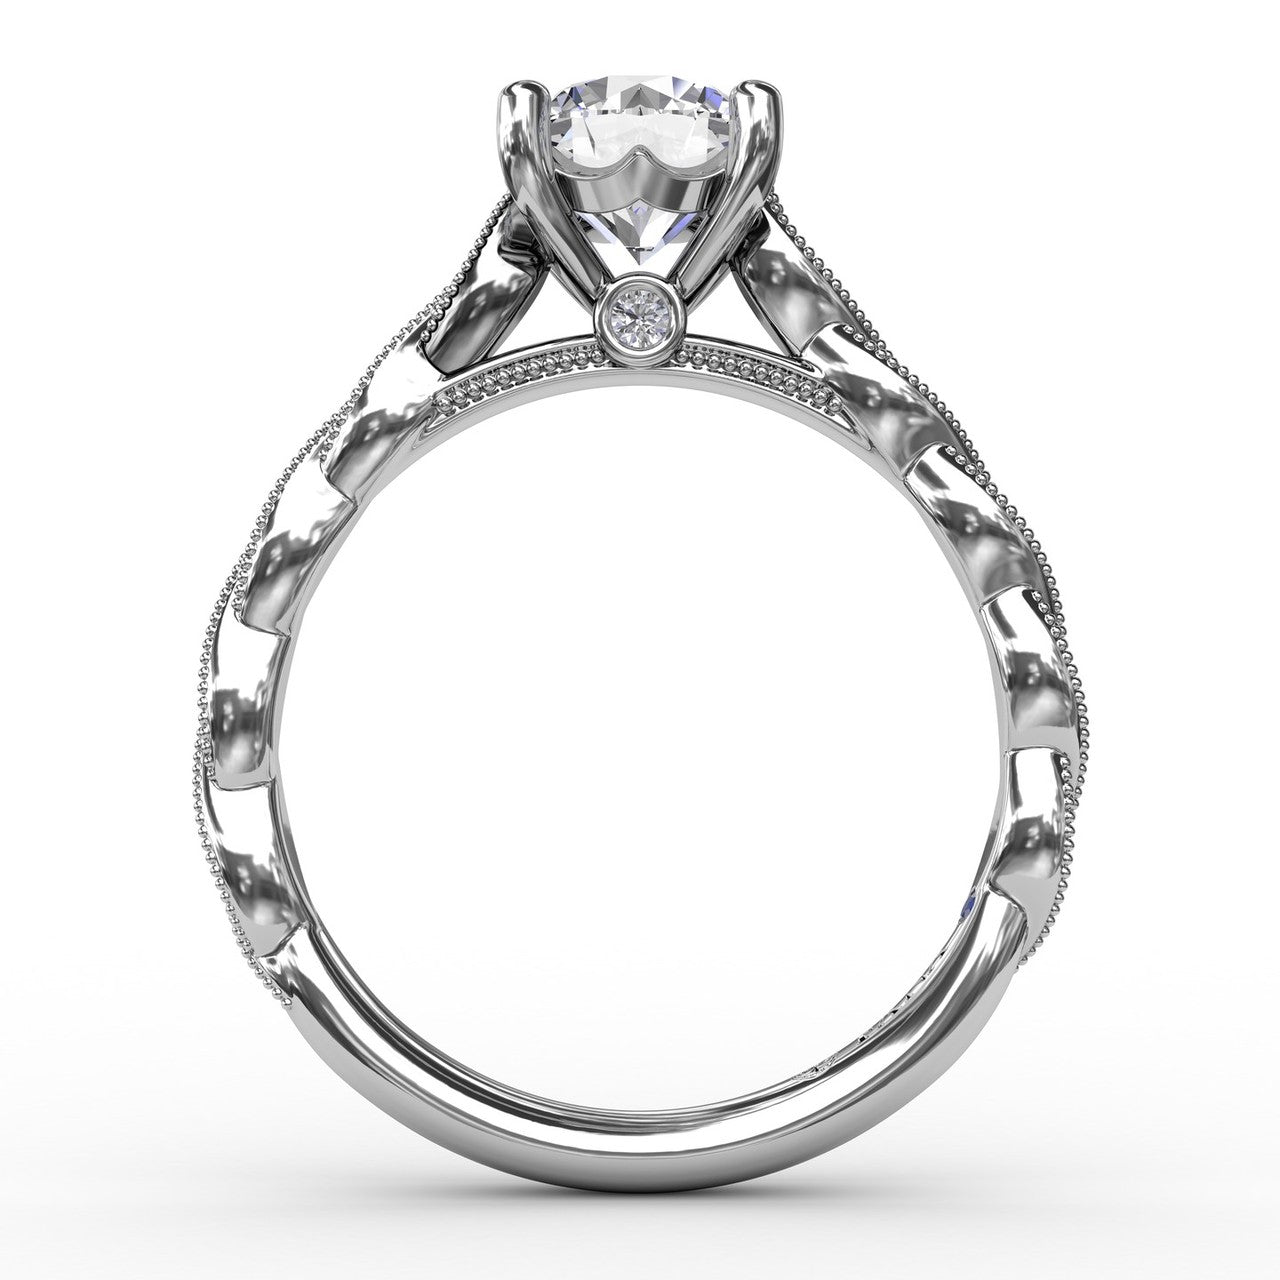 FANA 14 Karat wiith Side Stones Round Shape Engagement Ring SW3258/WG 1.5 CT